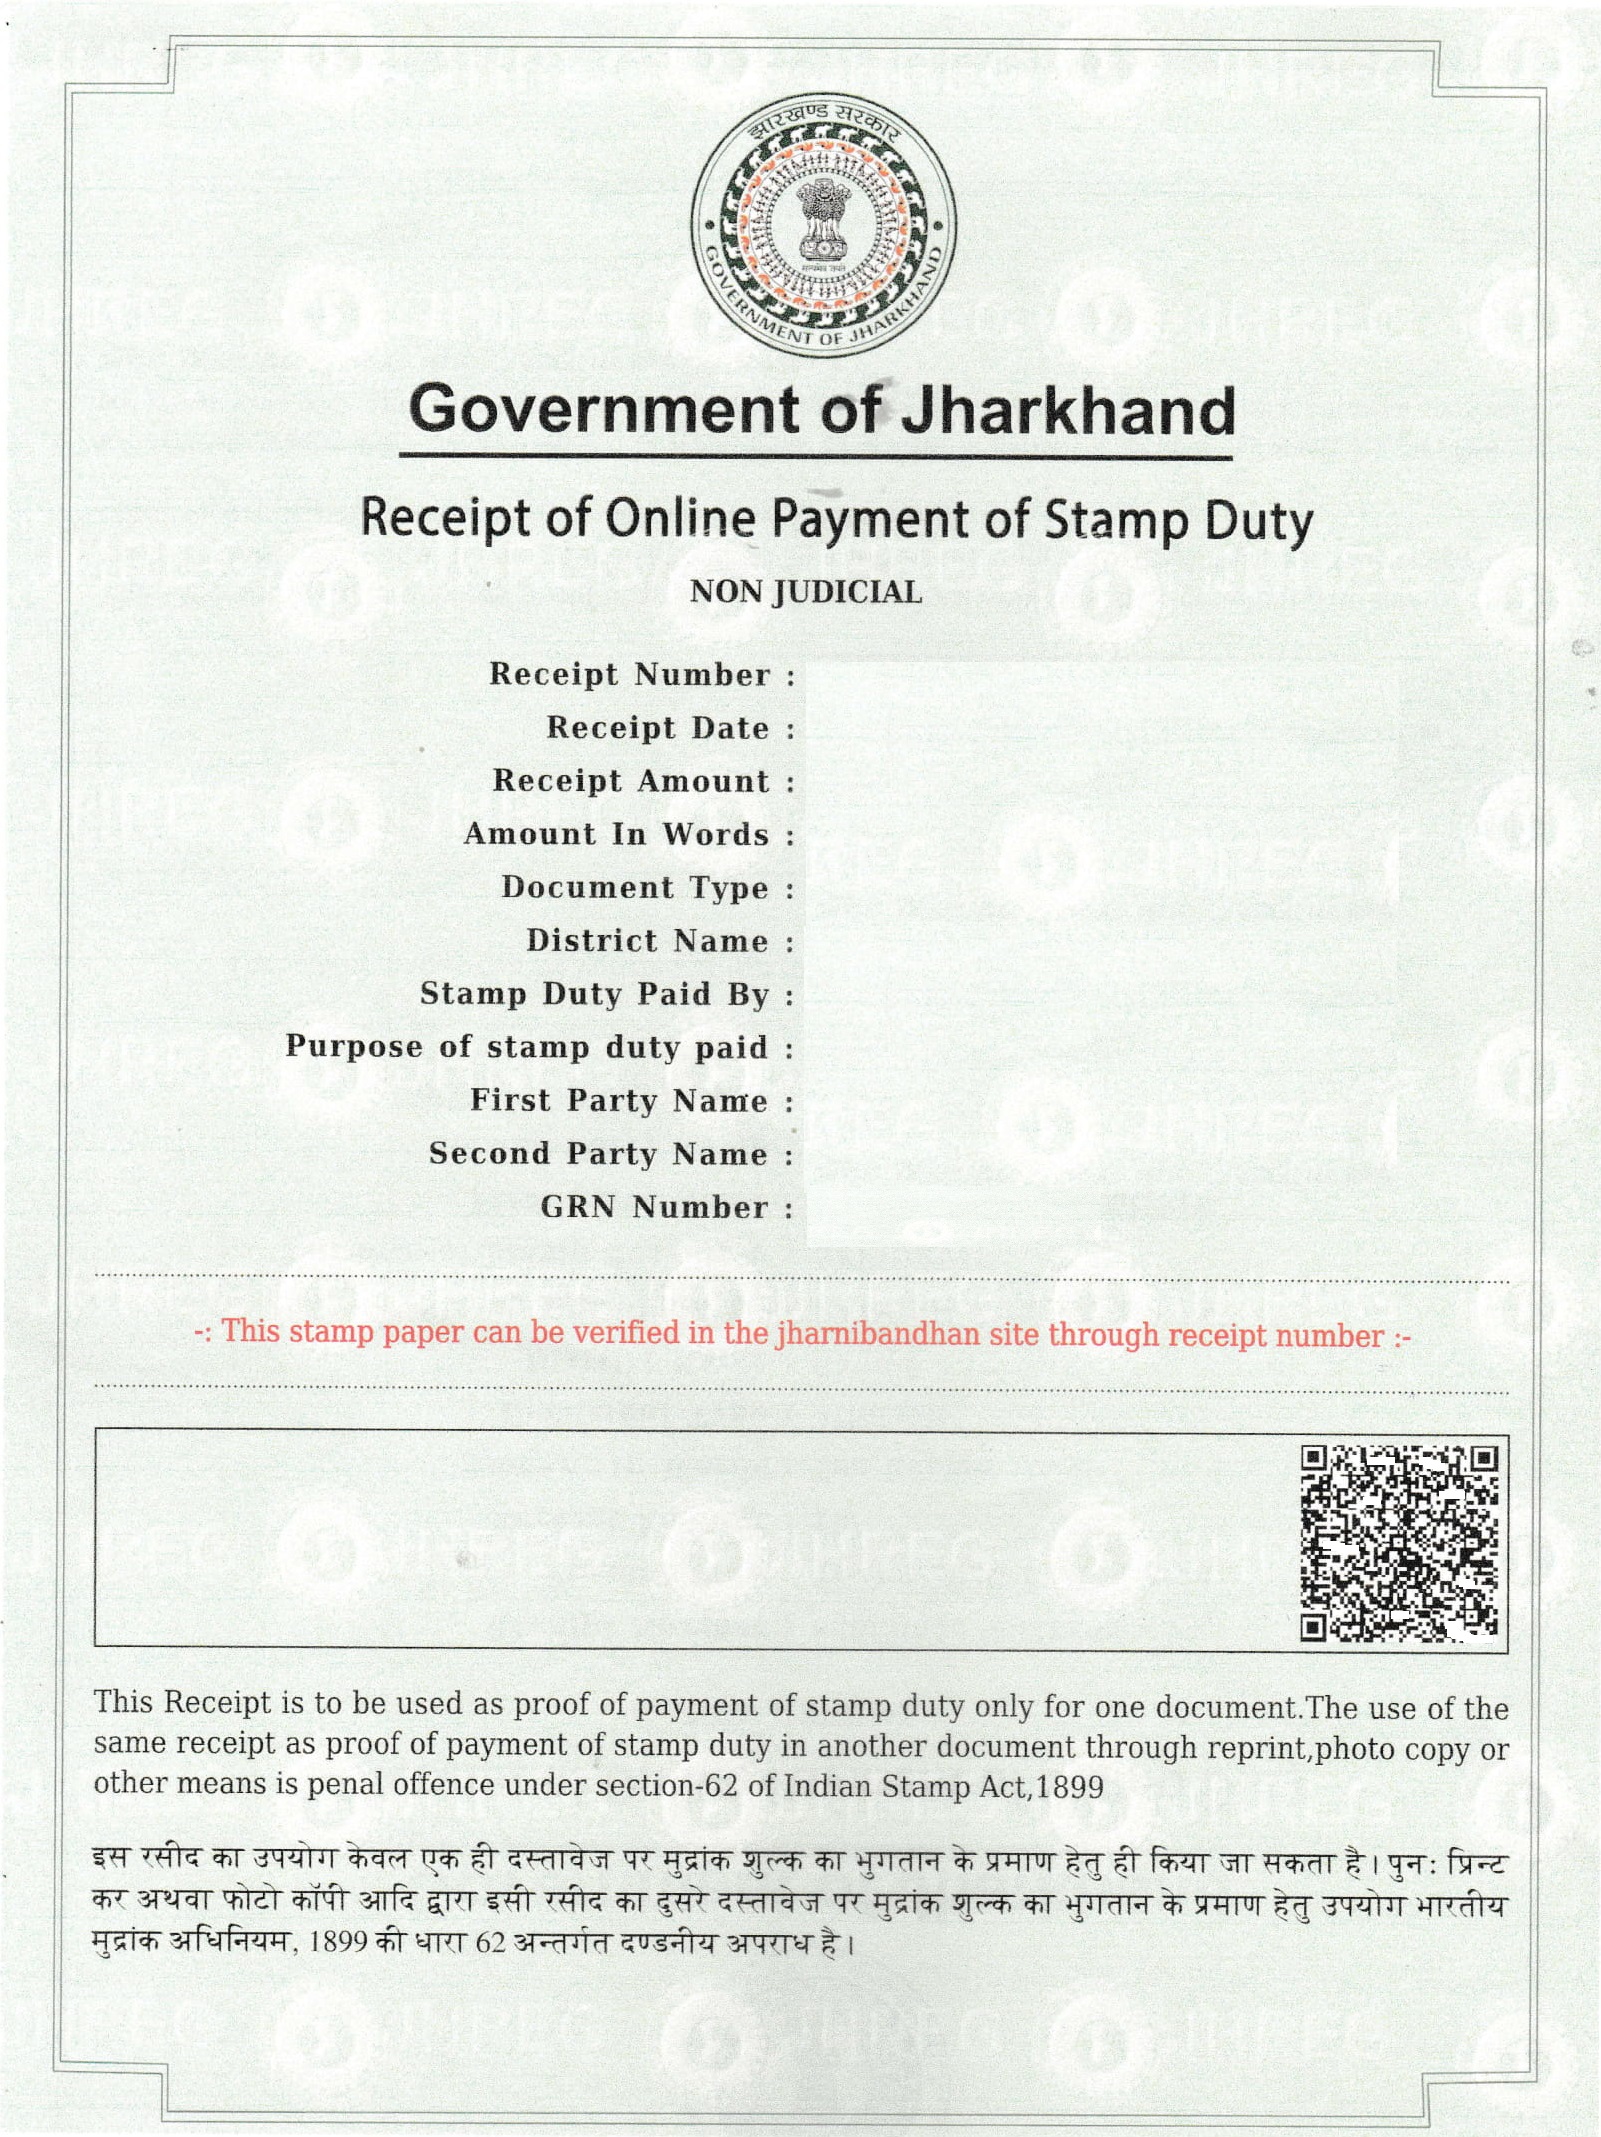 buy online stamp paper haryana